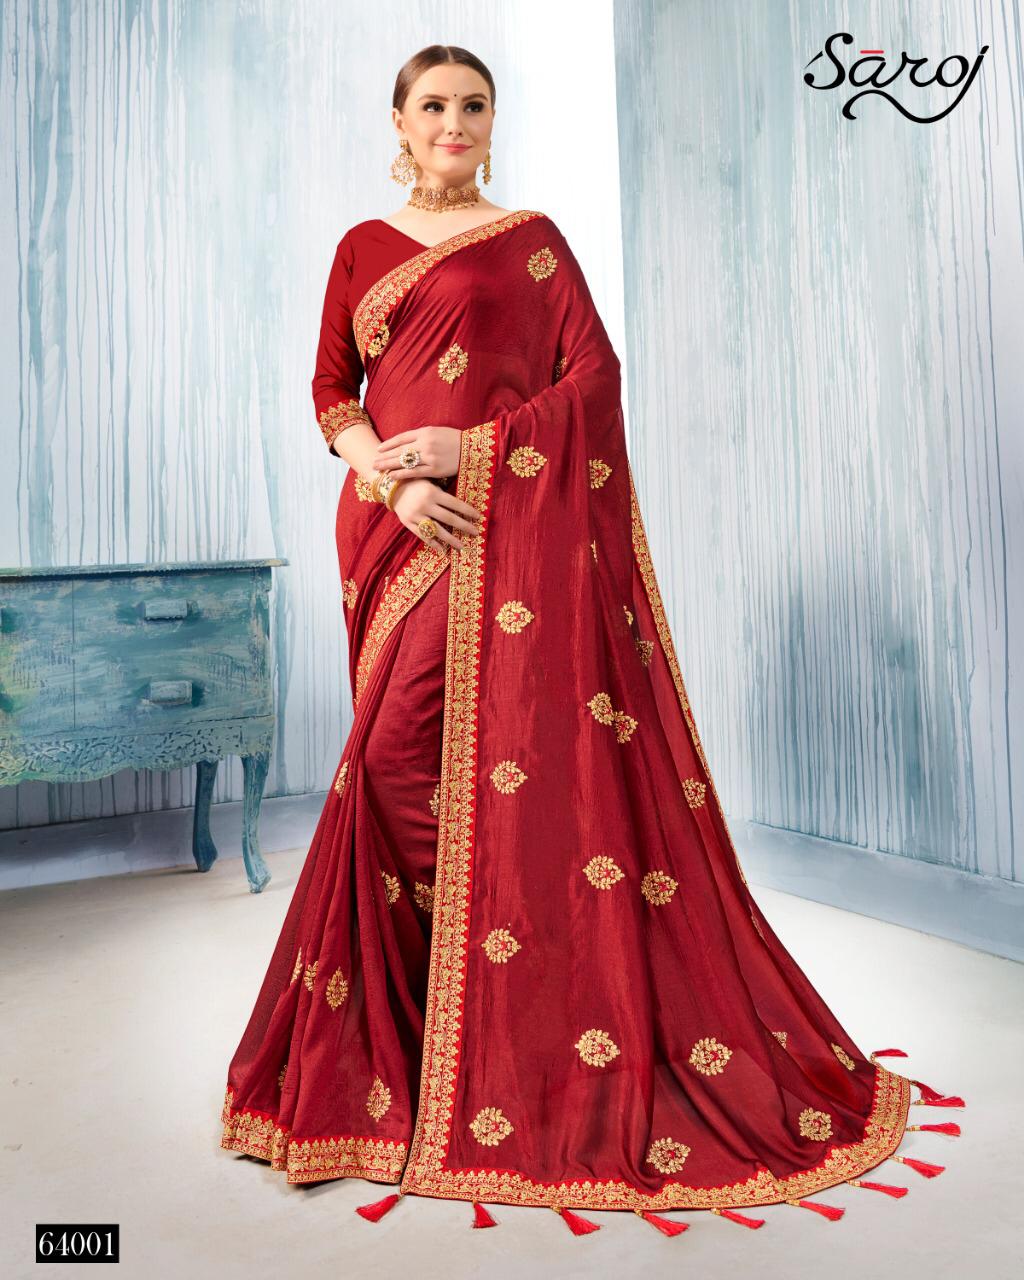 Saroj Deepika beautifully designed innovative style sarees in factory prices